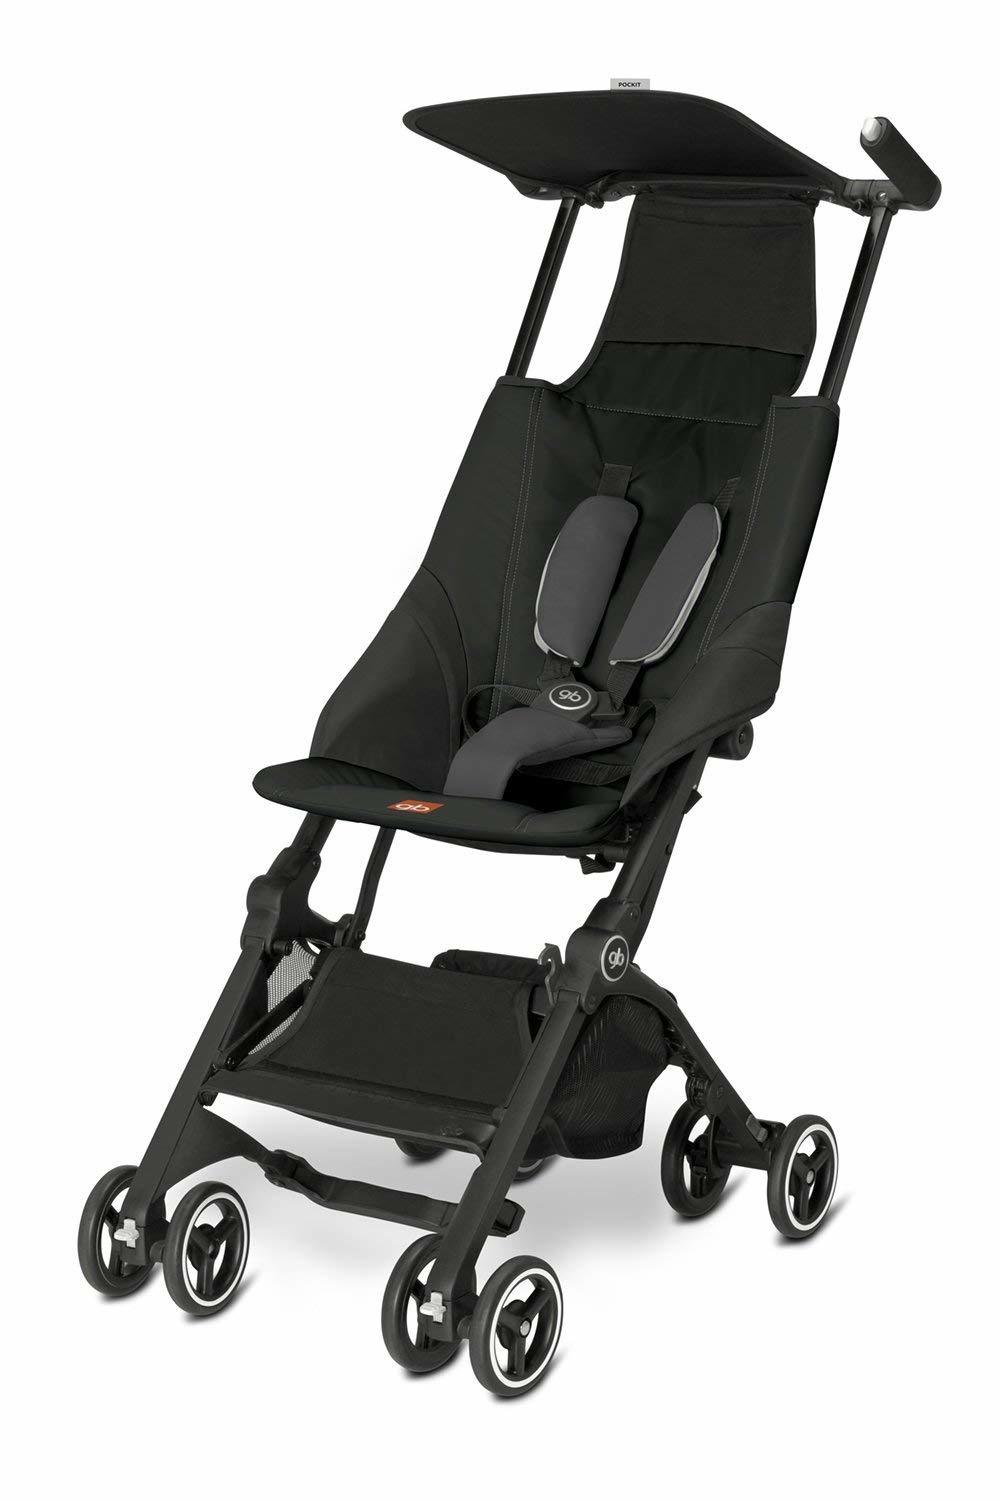 lightweight travel stroller for infants